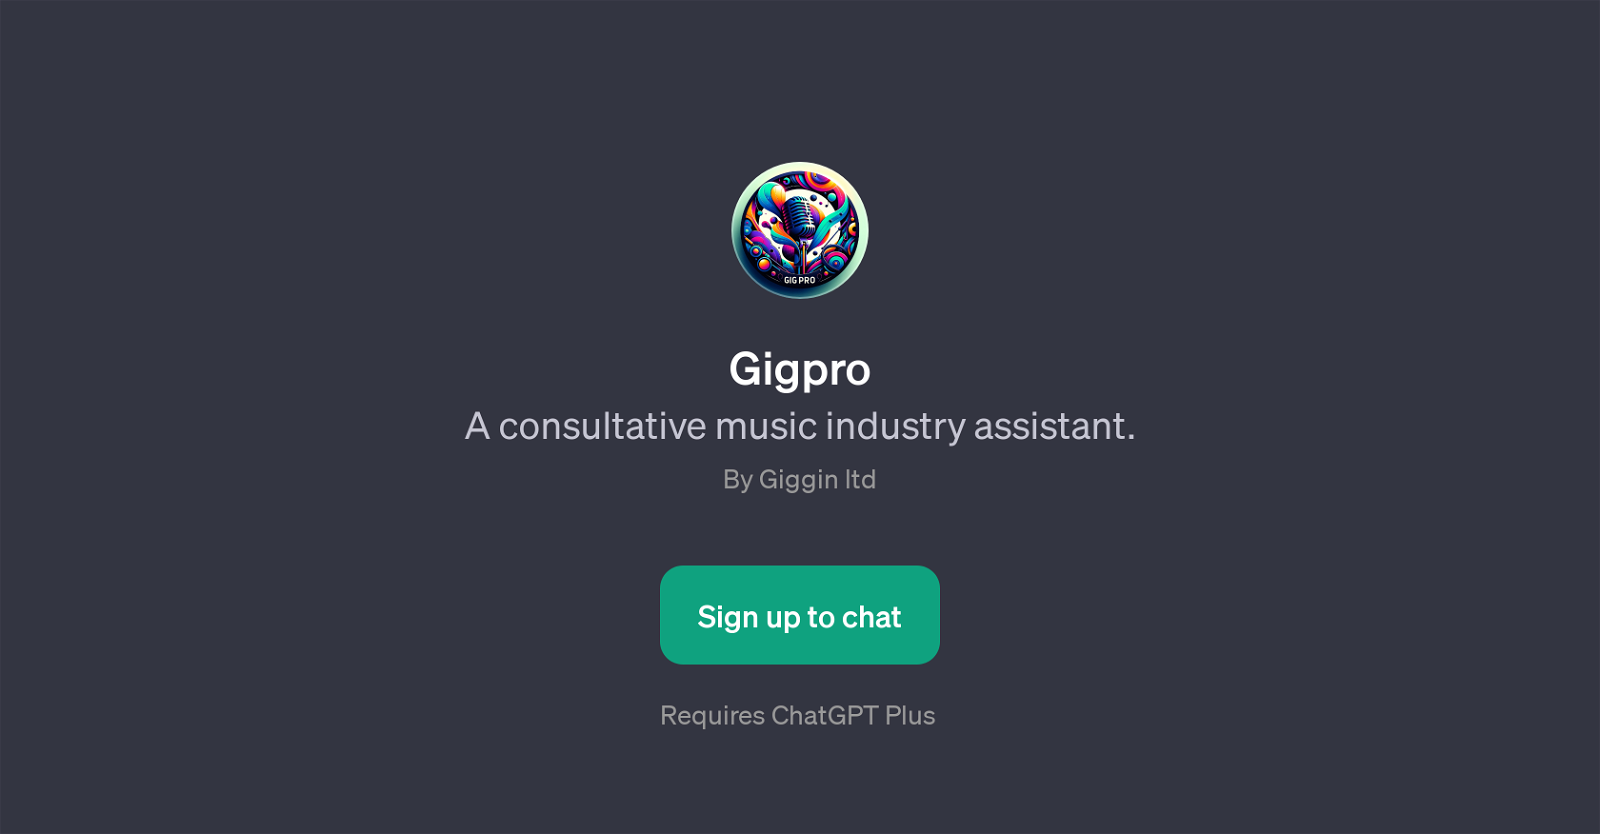 Gigpro website